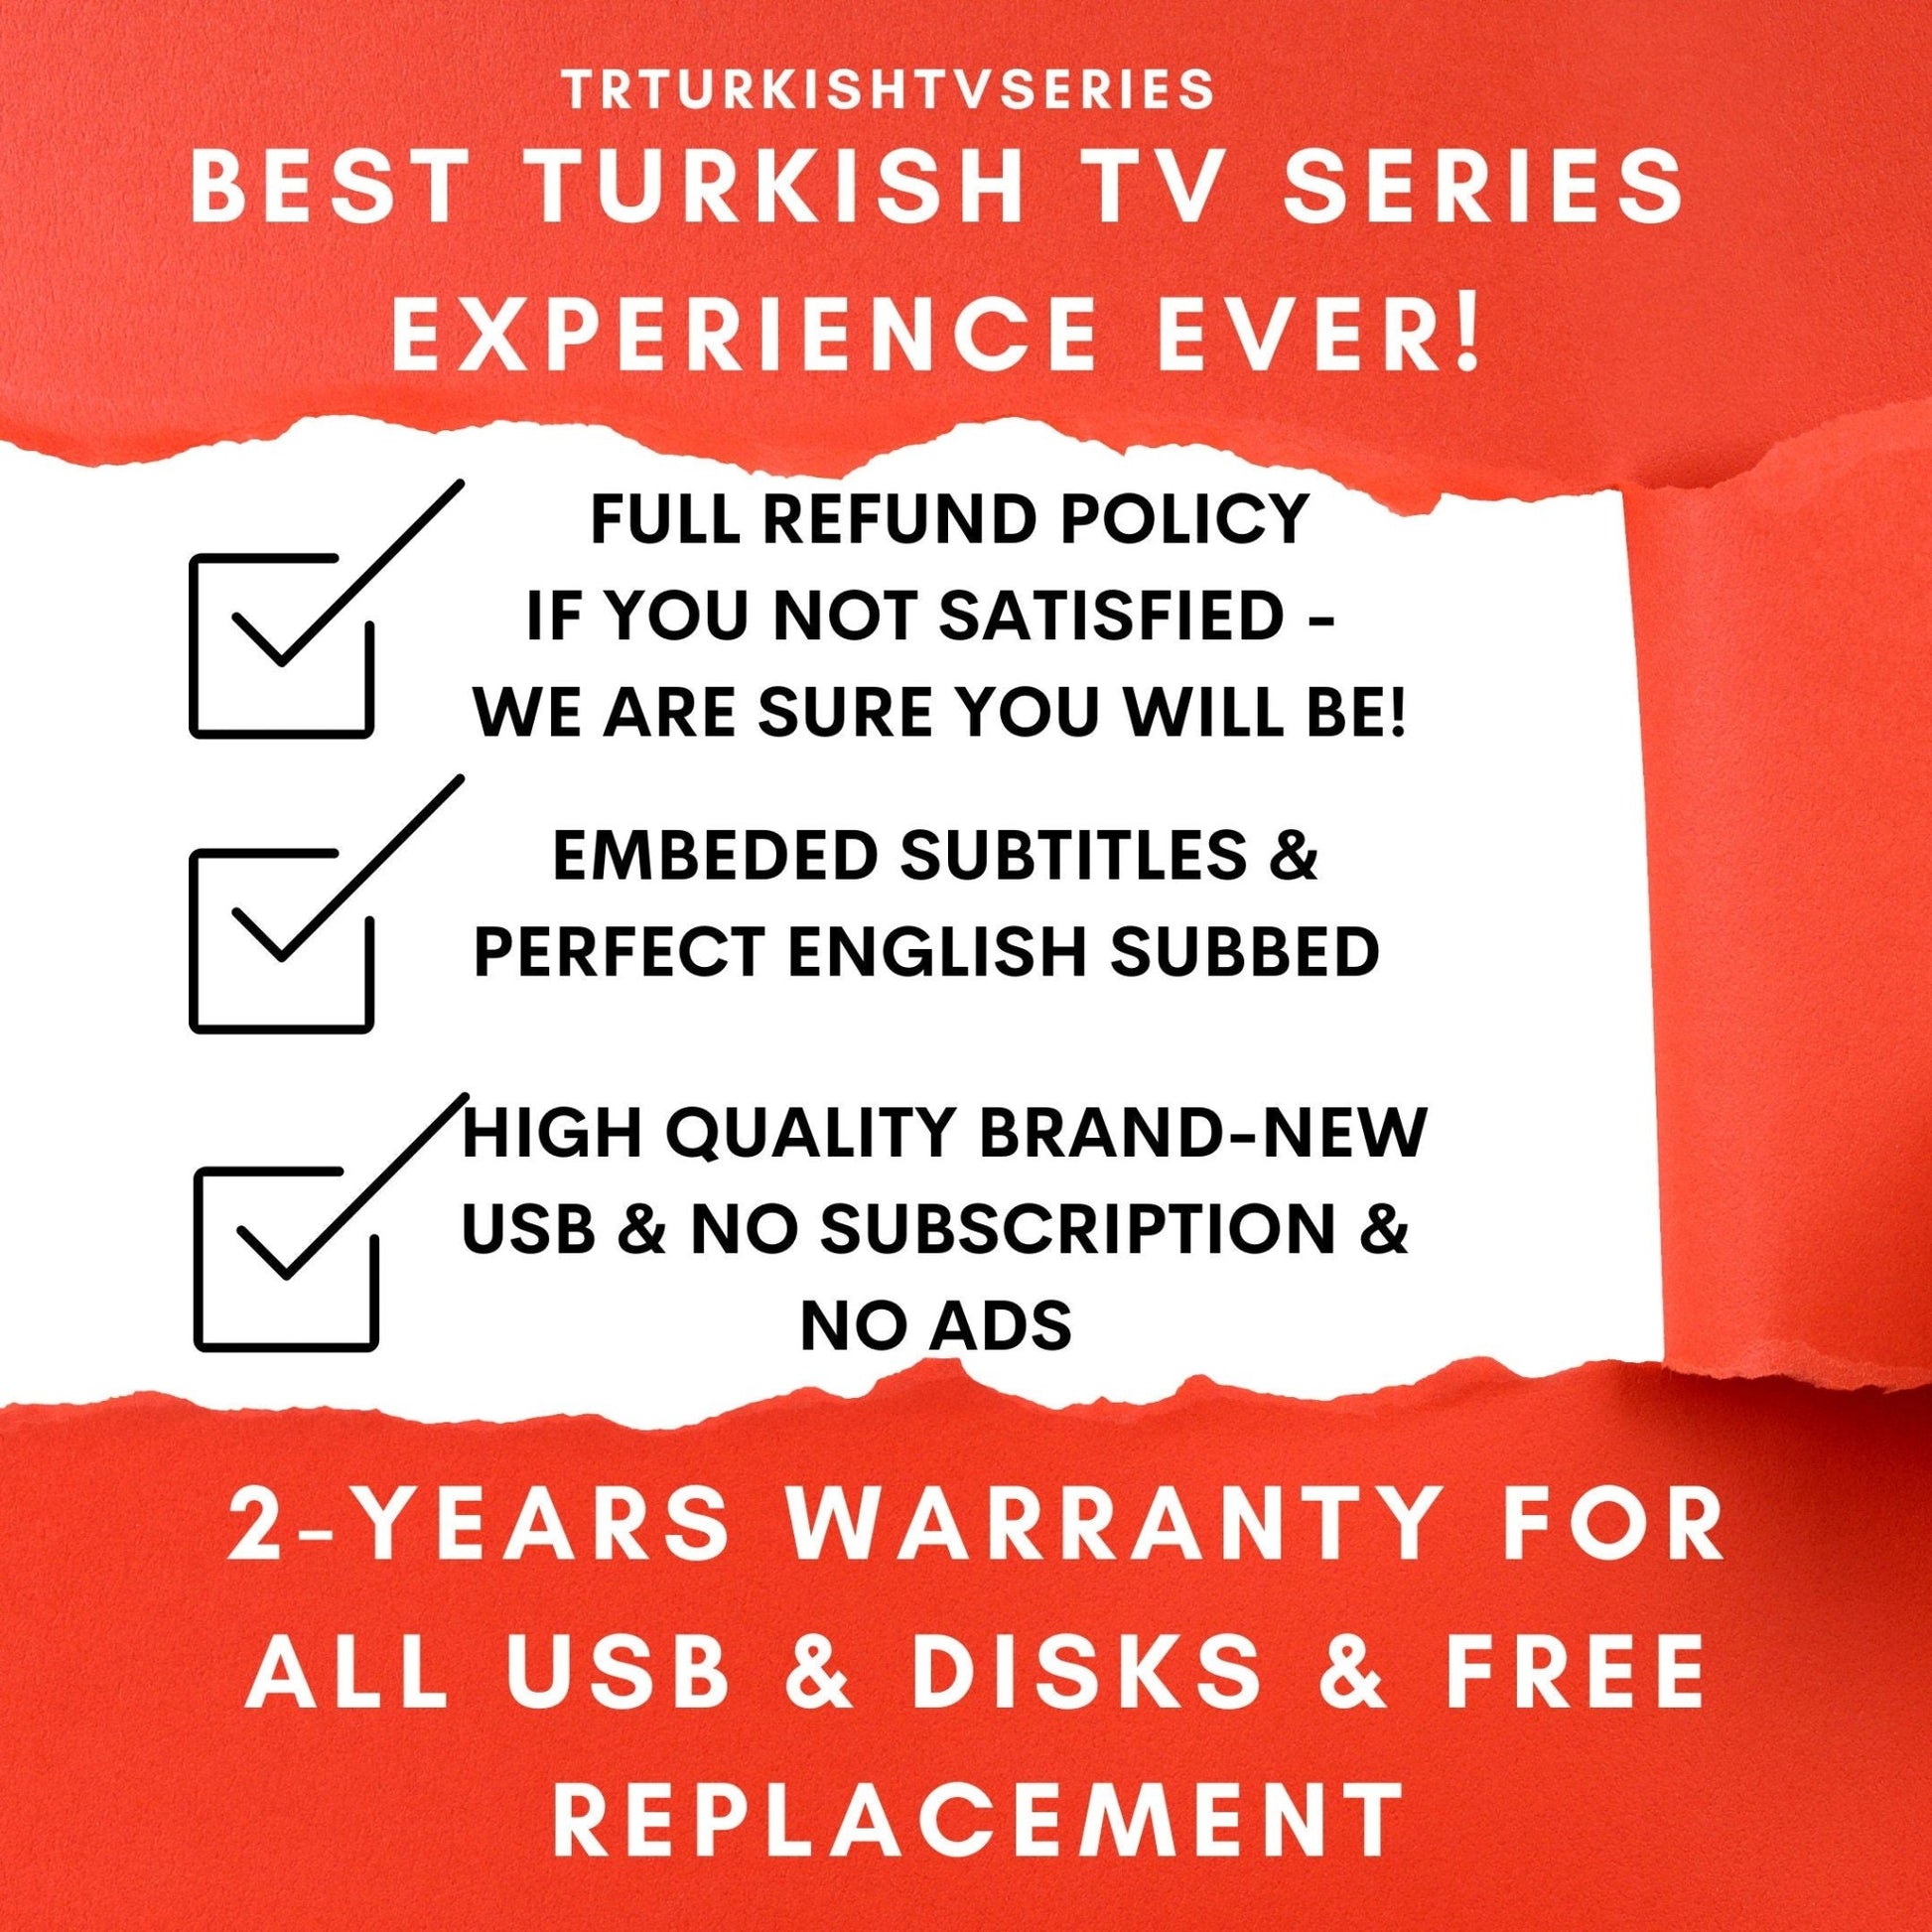 Ezel Complete Series USB - All Seasons, 71 Episodes - Full HD 1080P - Multi - Language Subtitles - No Ads - Turkish TV Series